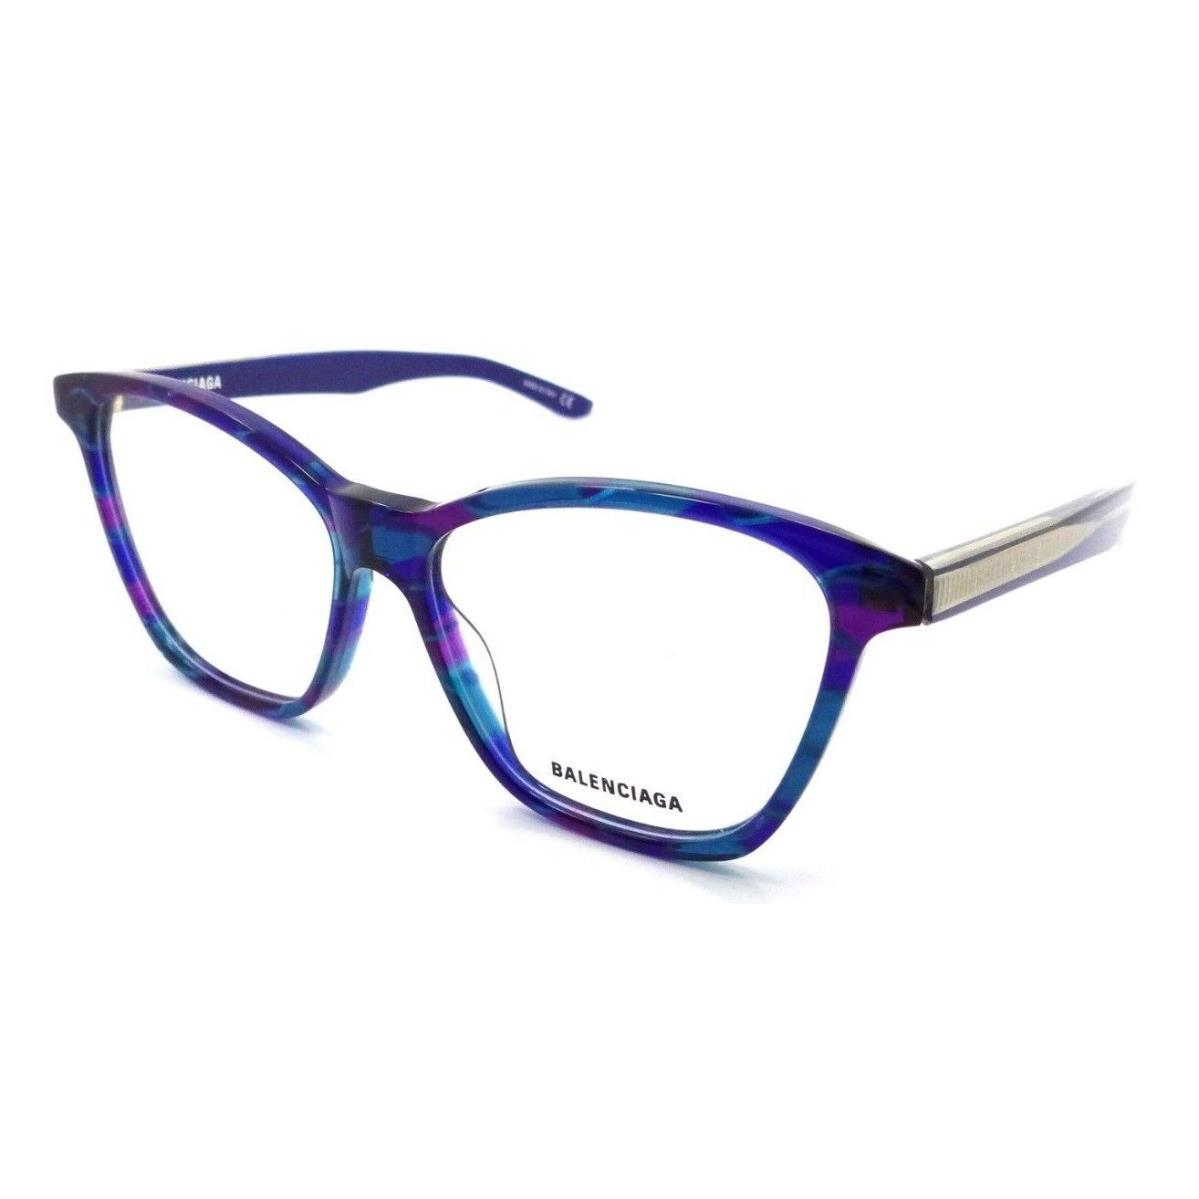 Balenciaga Eyeglasses Frames BB0029O 004 54-15-140 Multicolor Light Blue Transp - Frame: Multicolor